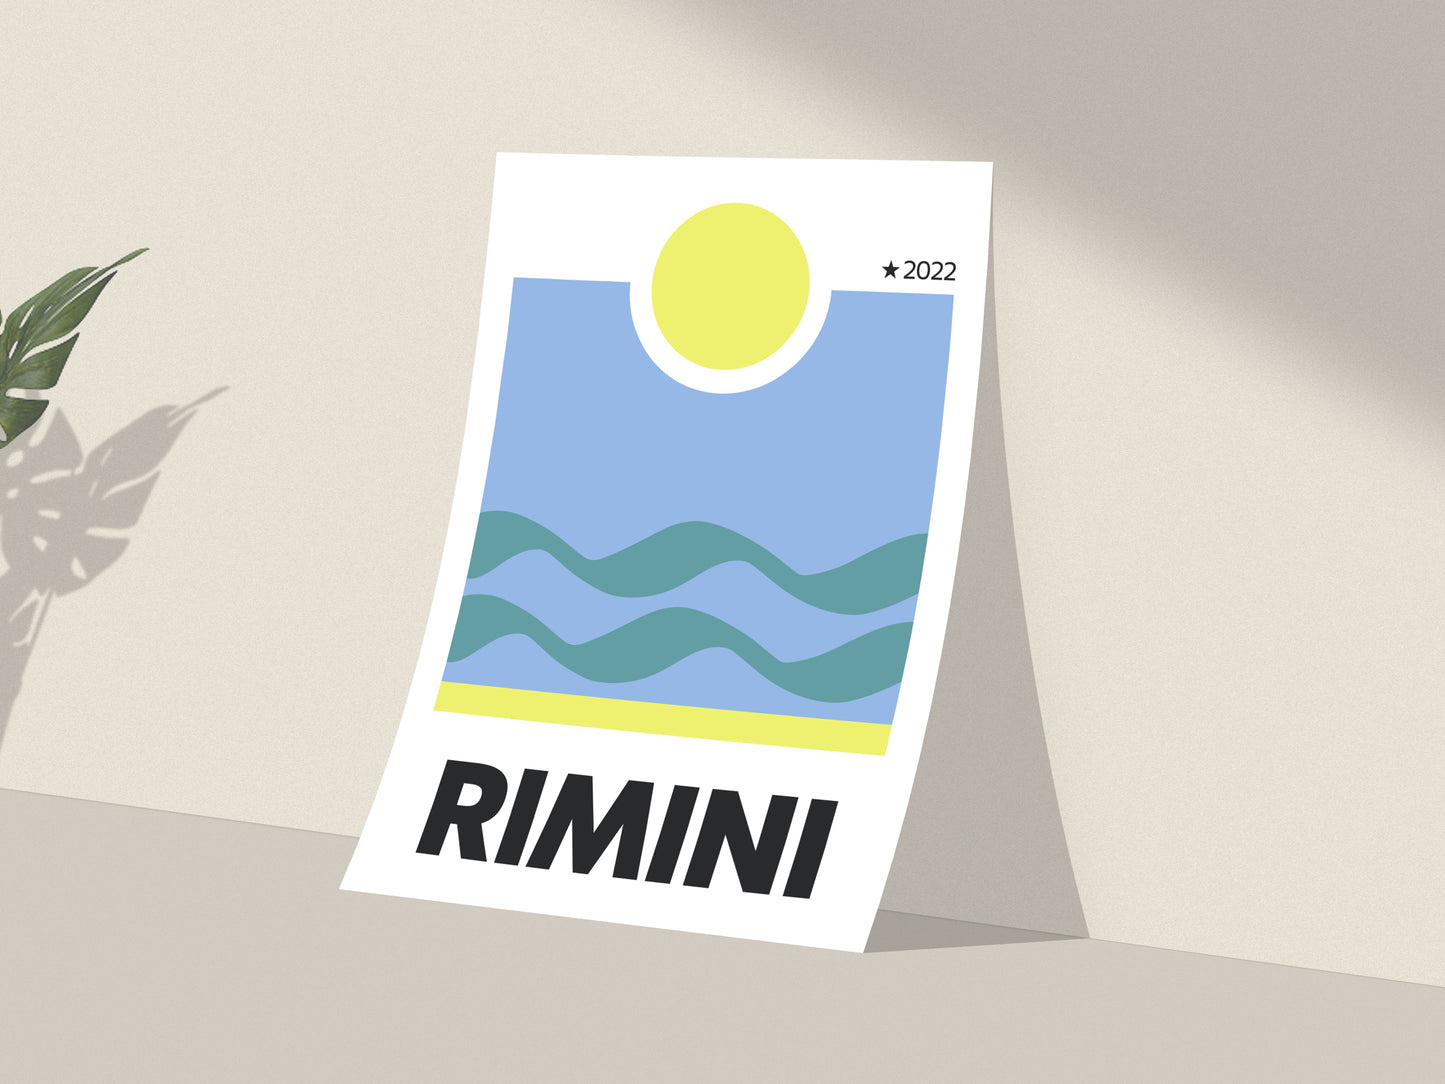 Rimini Fenix Trophy 2022 Print or Canvas